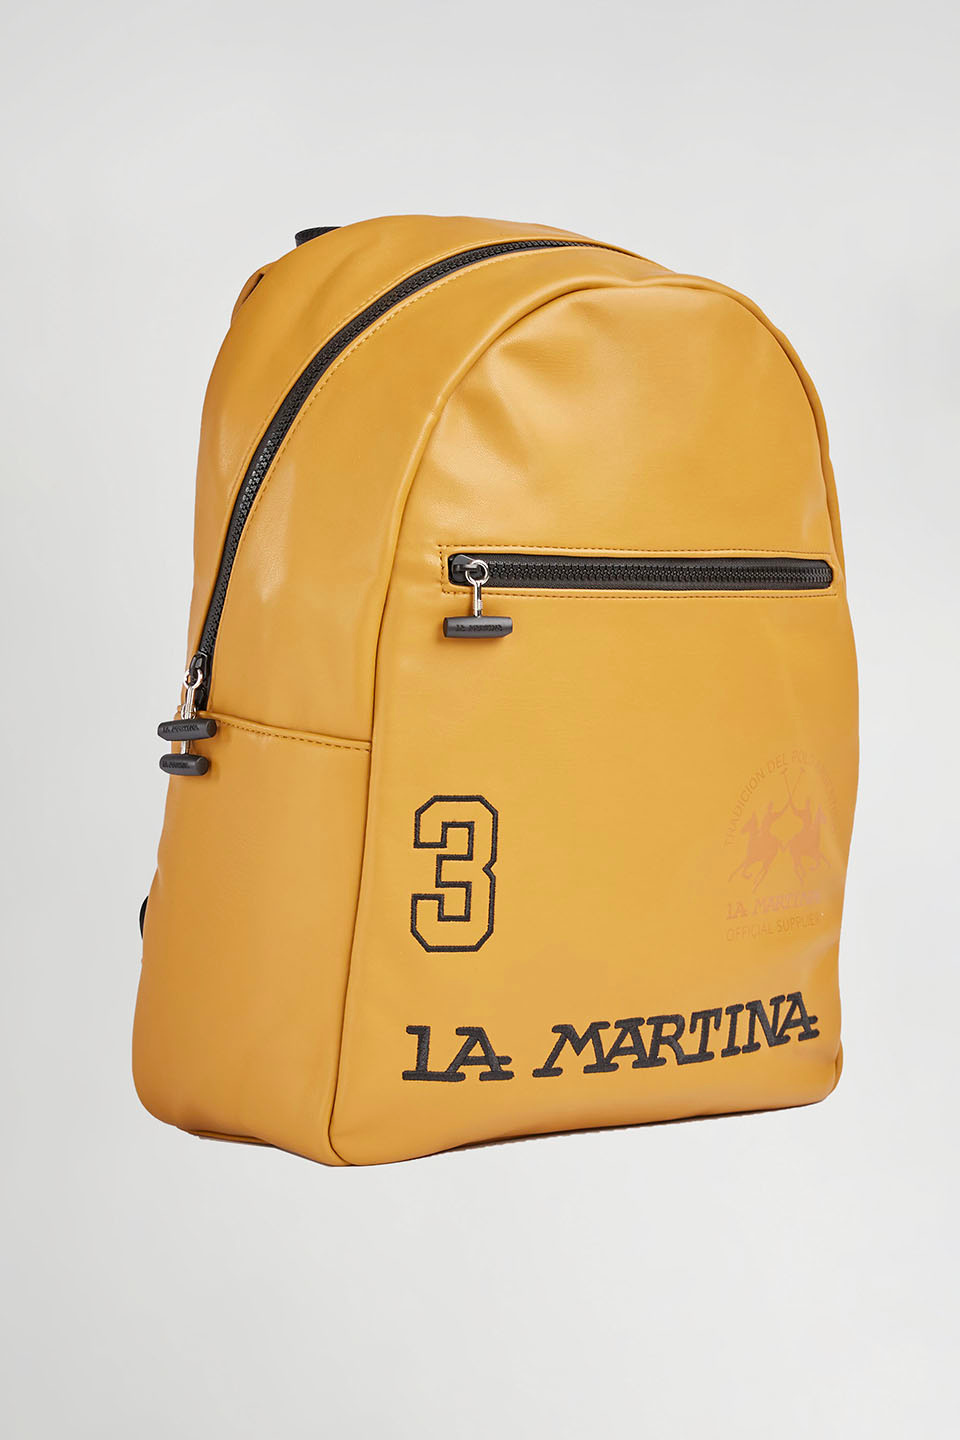 PU leather backpack | La Martina - Official Online Shop